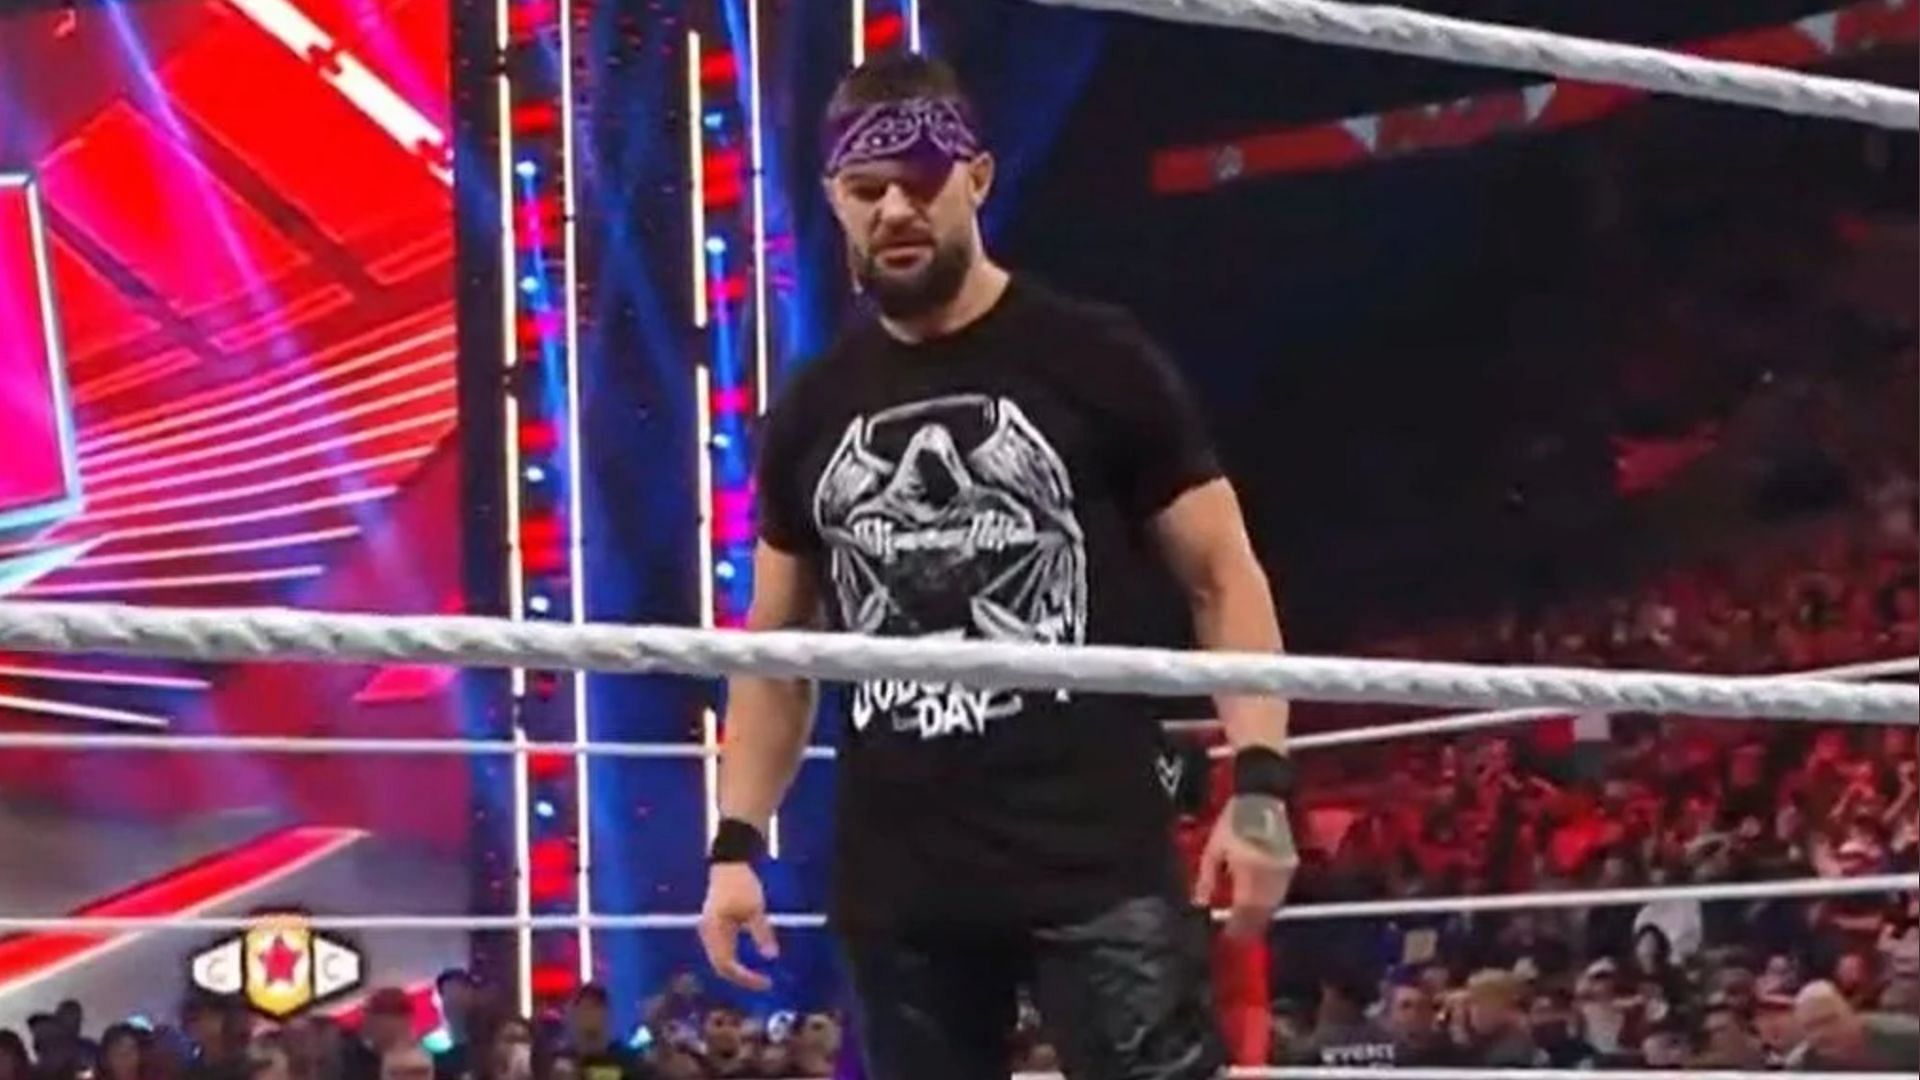 WWE RAW star &amp; Judgment Day member Finn Balor